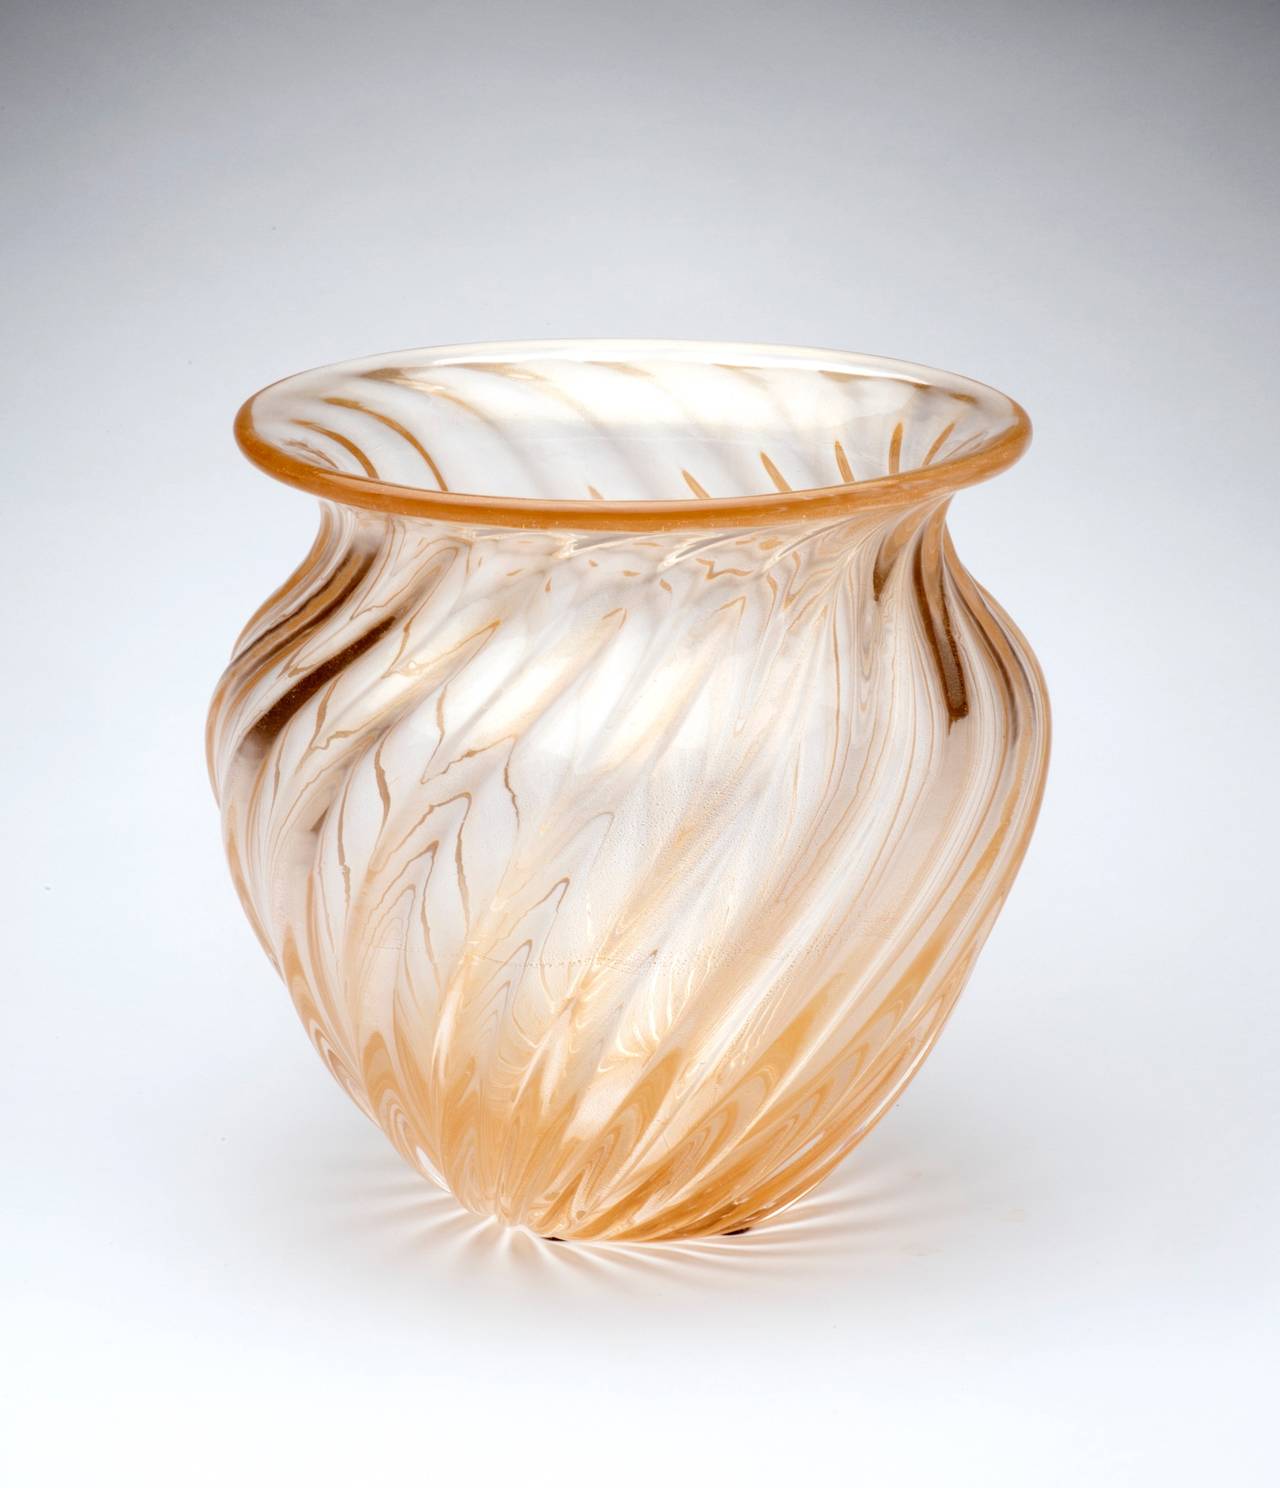 Archimede Seguso (Murano, 1909–1999).
Impressive Murano glass vase with gold flecks.
Handblown glass.
Measures: Height 10.5 inches,
diameter 10.5 inches.